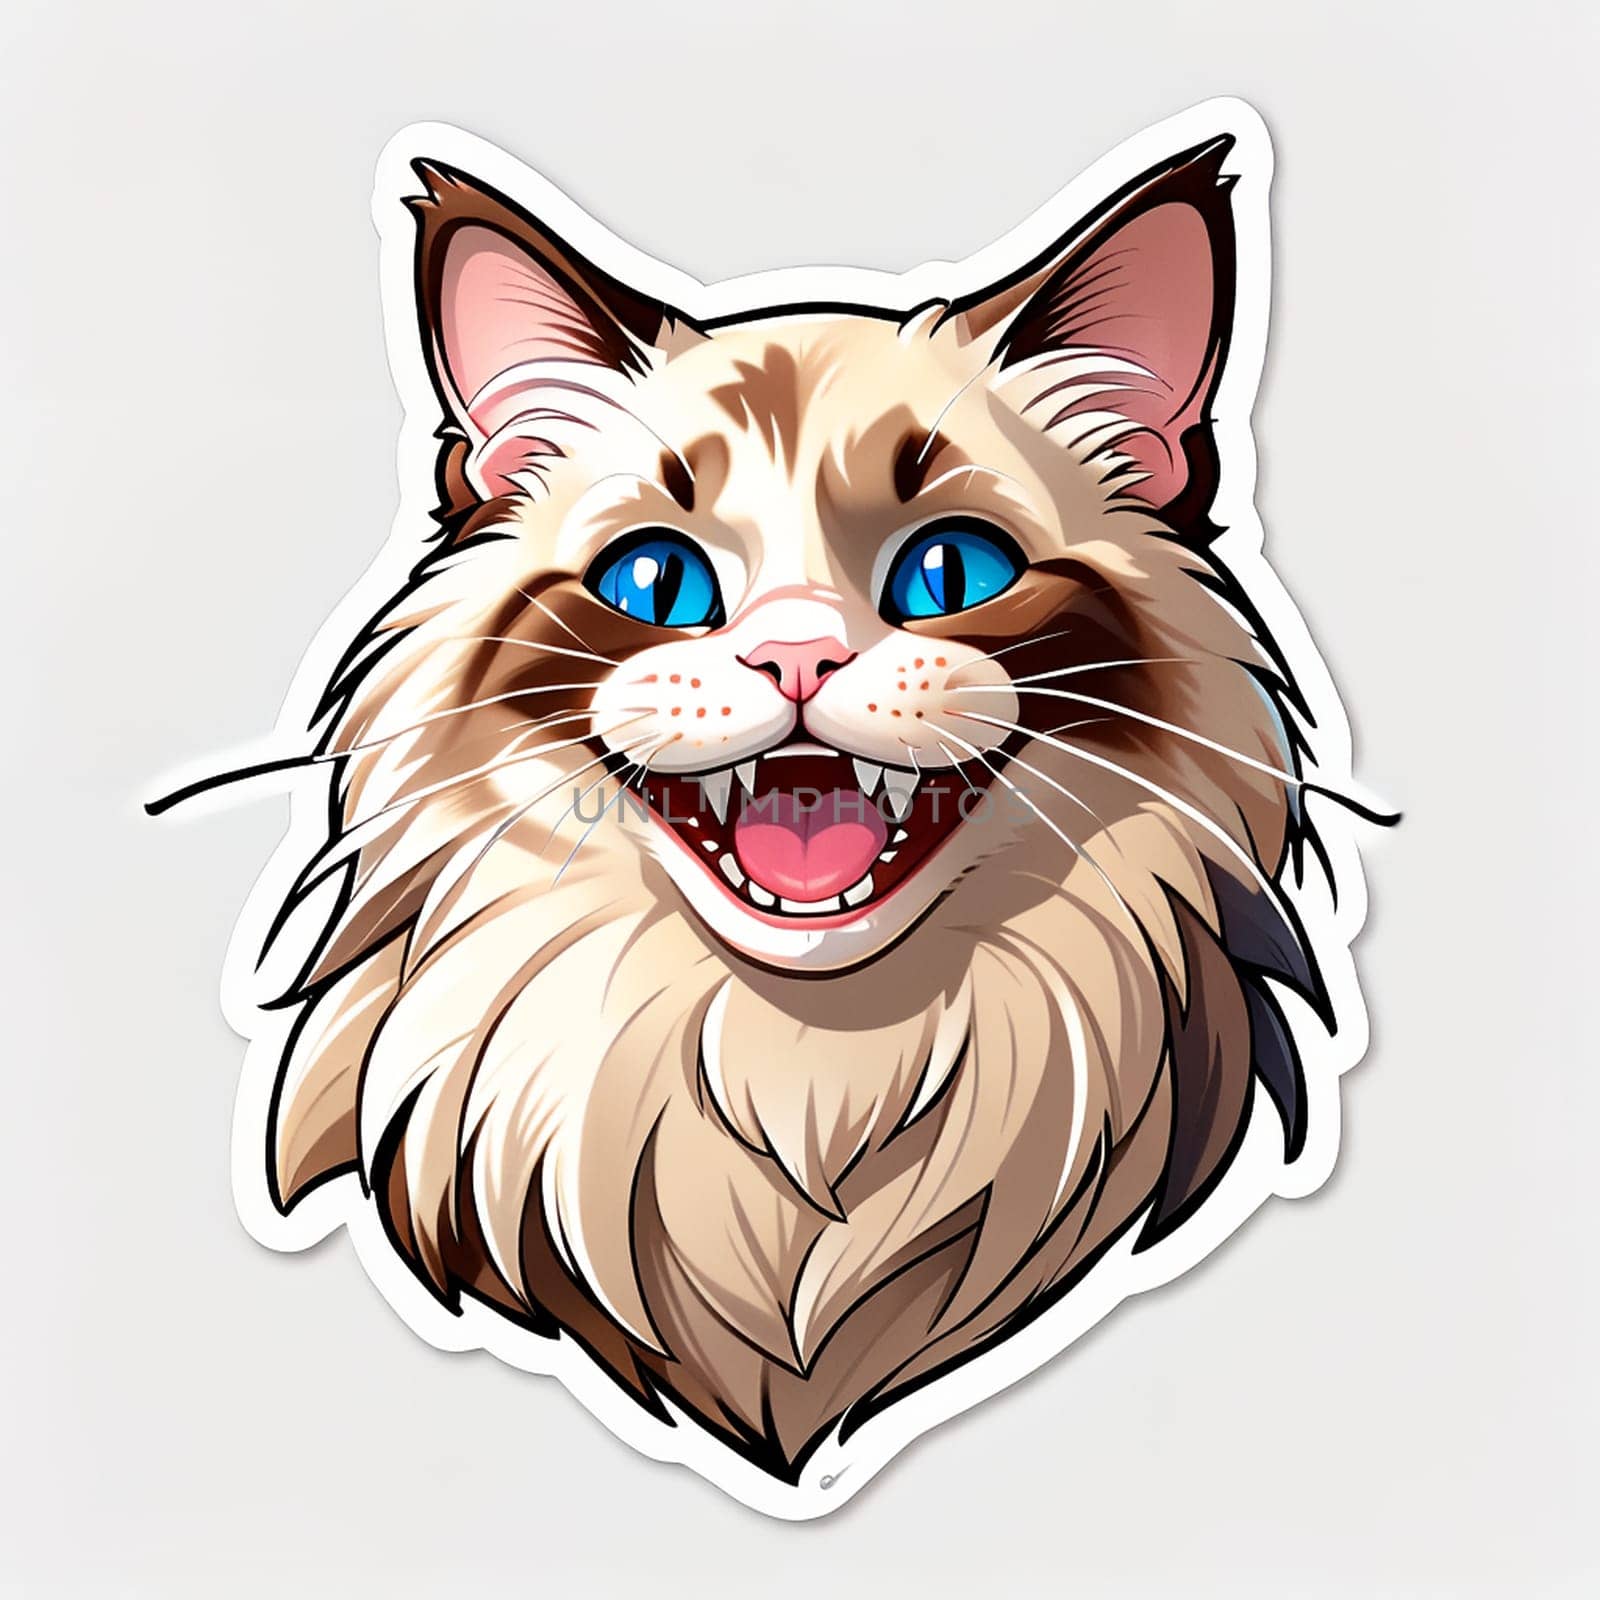 Ragdoll cat sticker by Rawlik